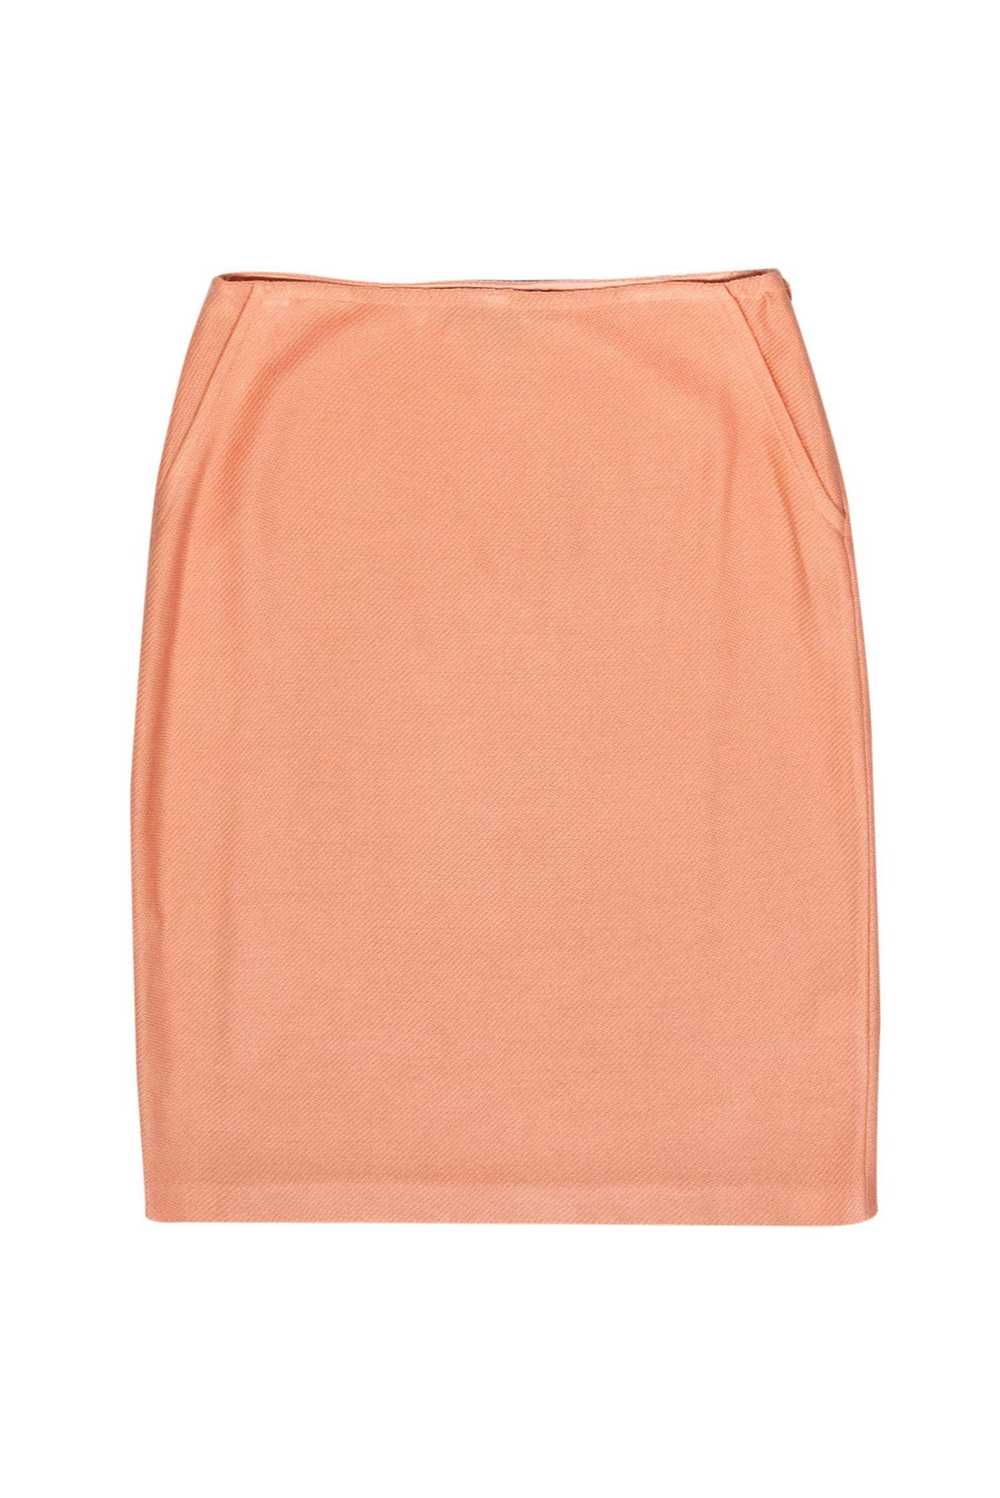 St. John - Peach Woven Pencil Skirt Sz 6 - image 1